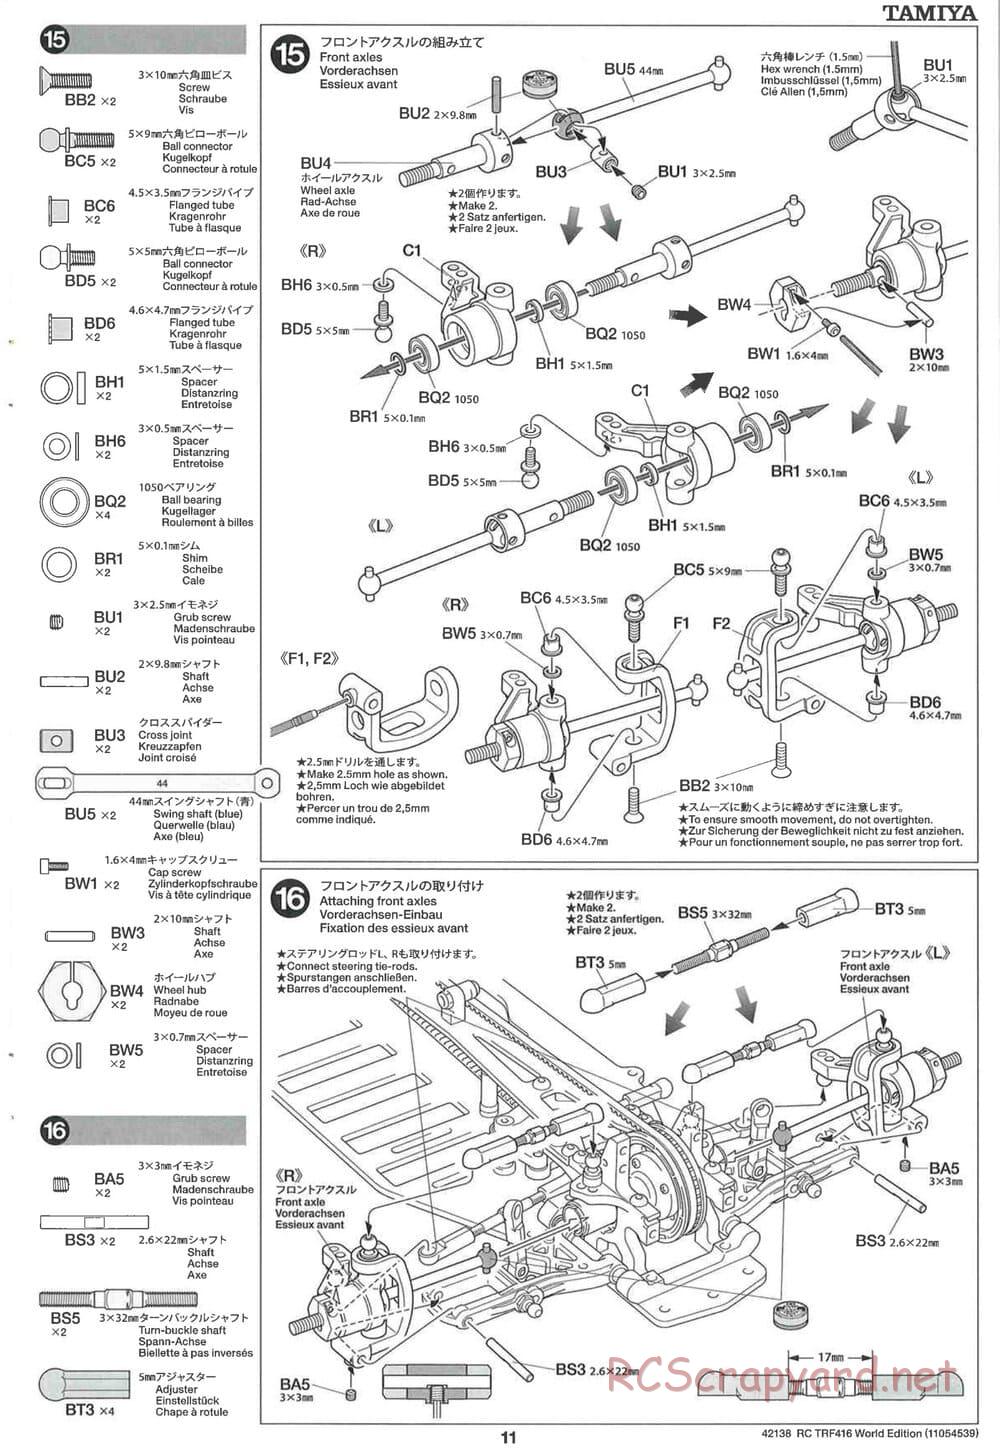 Tamiya - TRF416 World Edition Chassis - Manual - Page 11